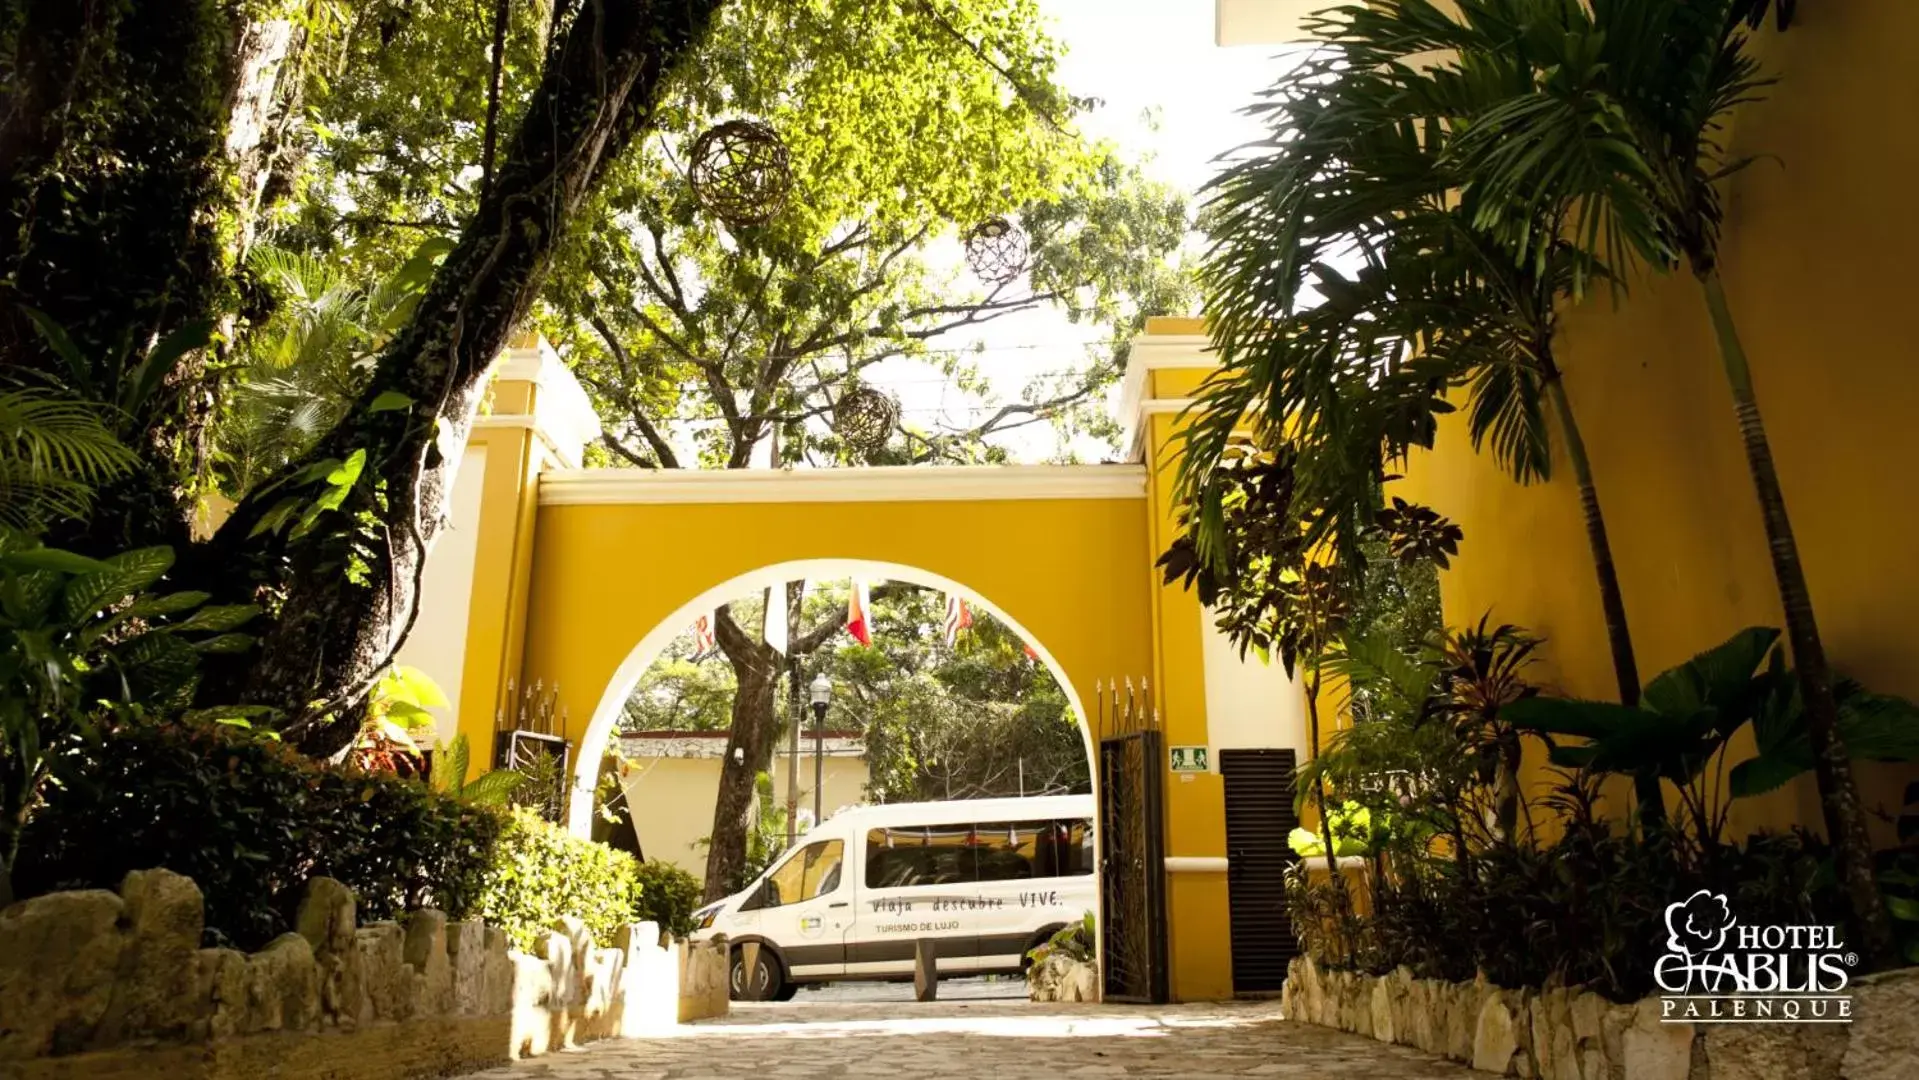 Patio in Hotel Chablis Palenque